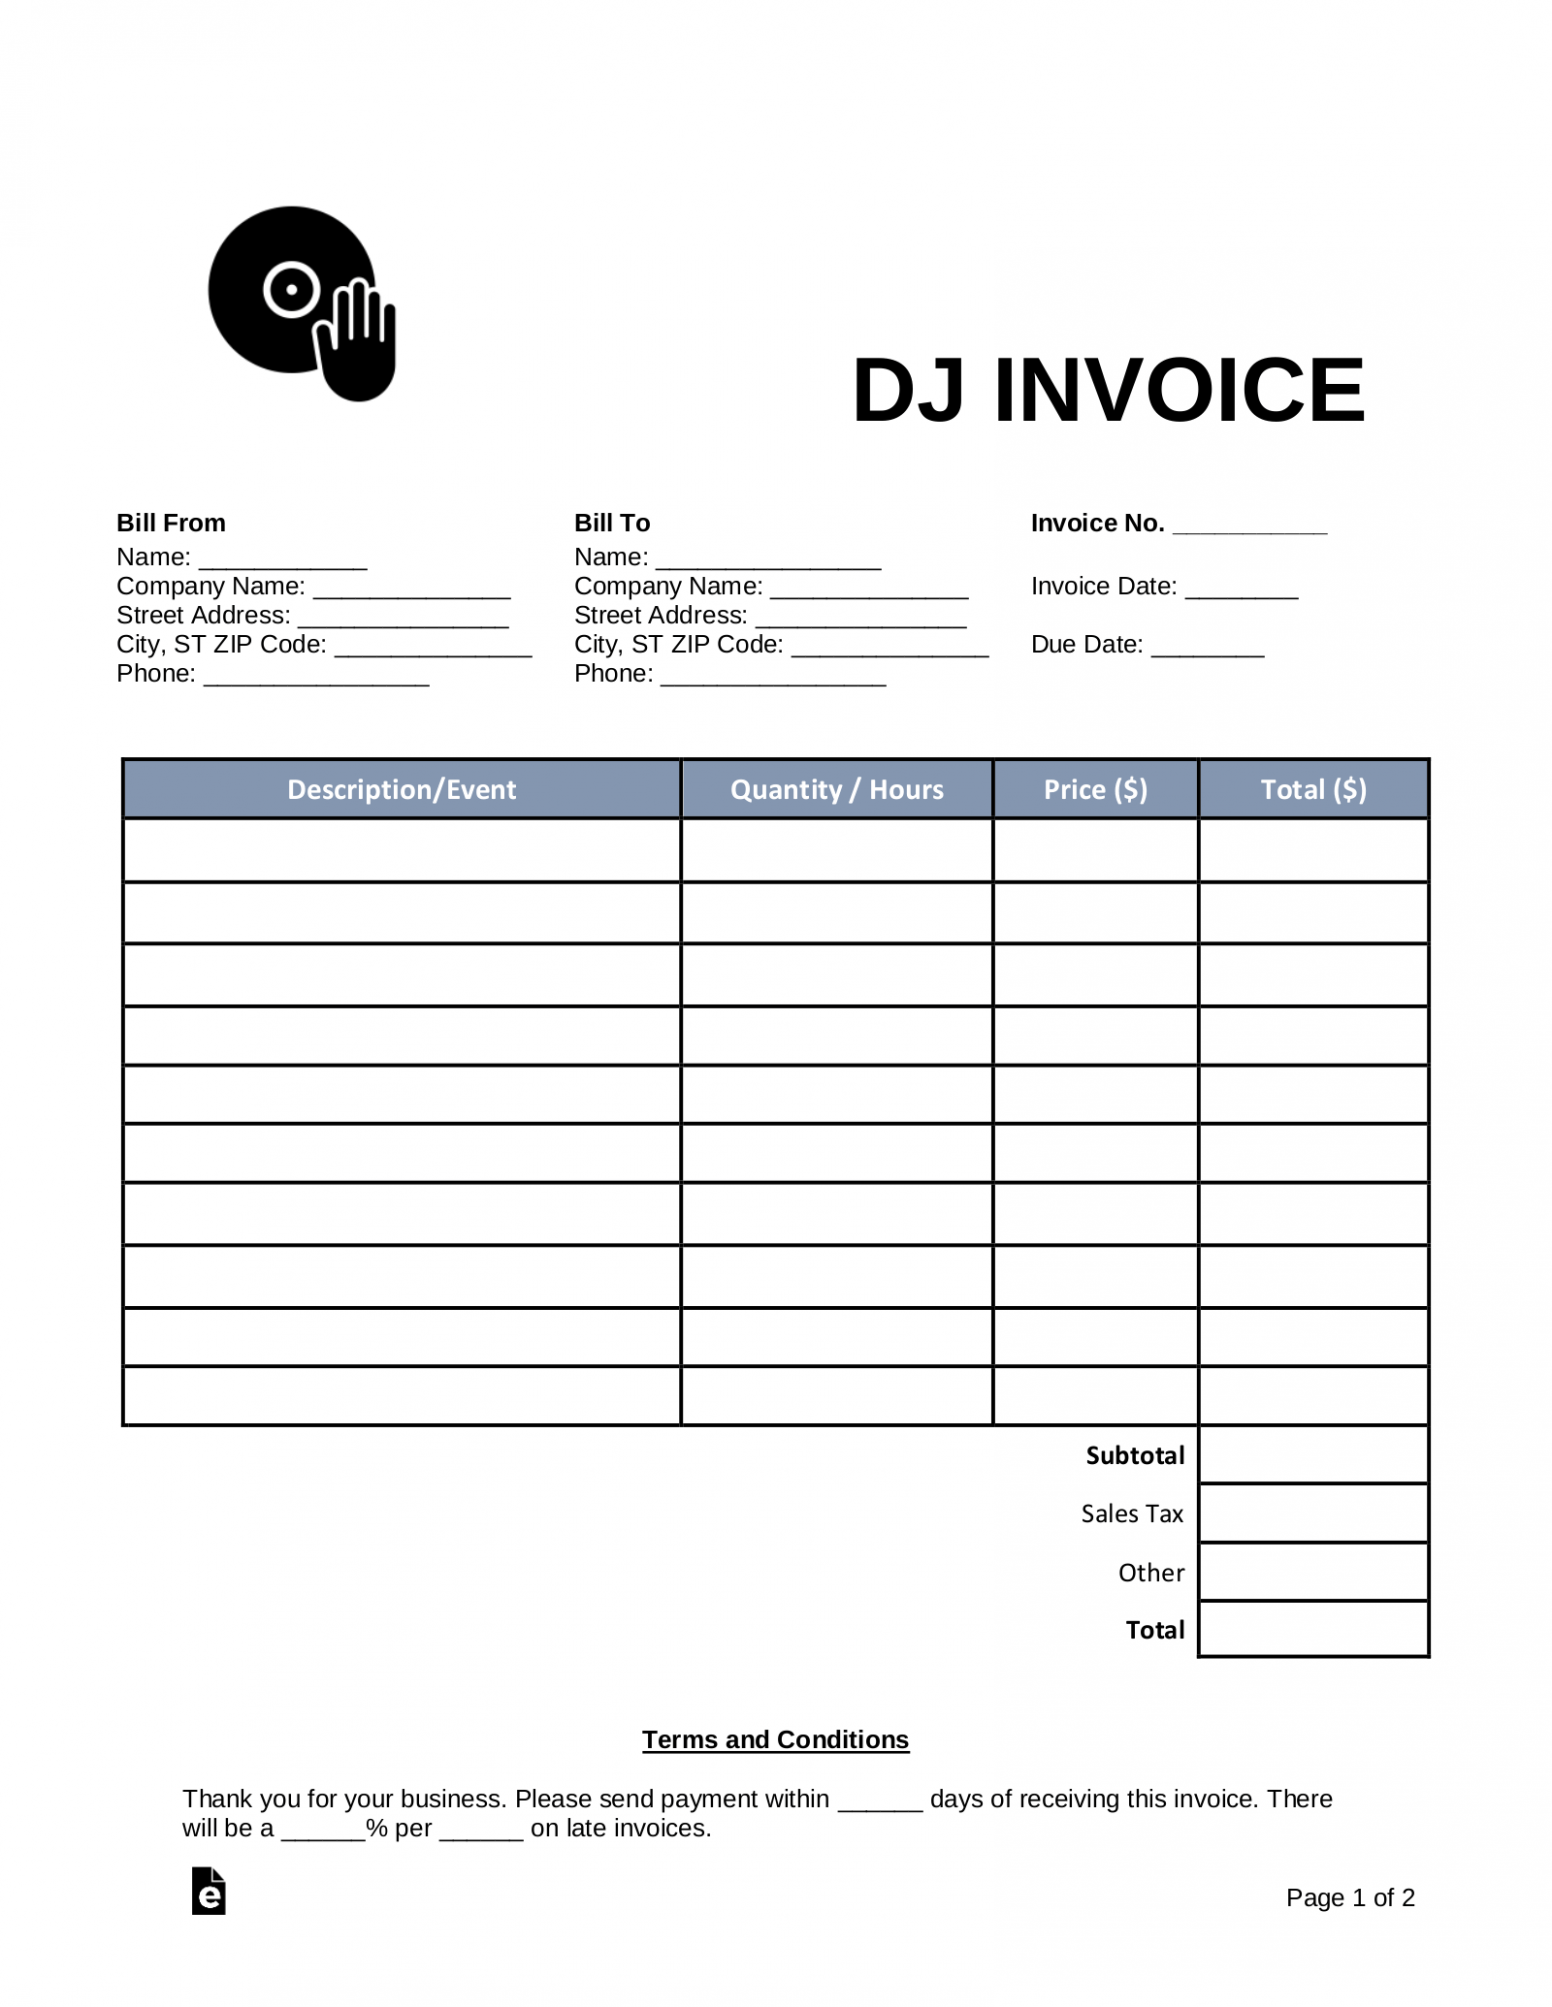 Sample Dj Invoice Template Excel